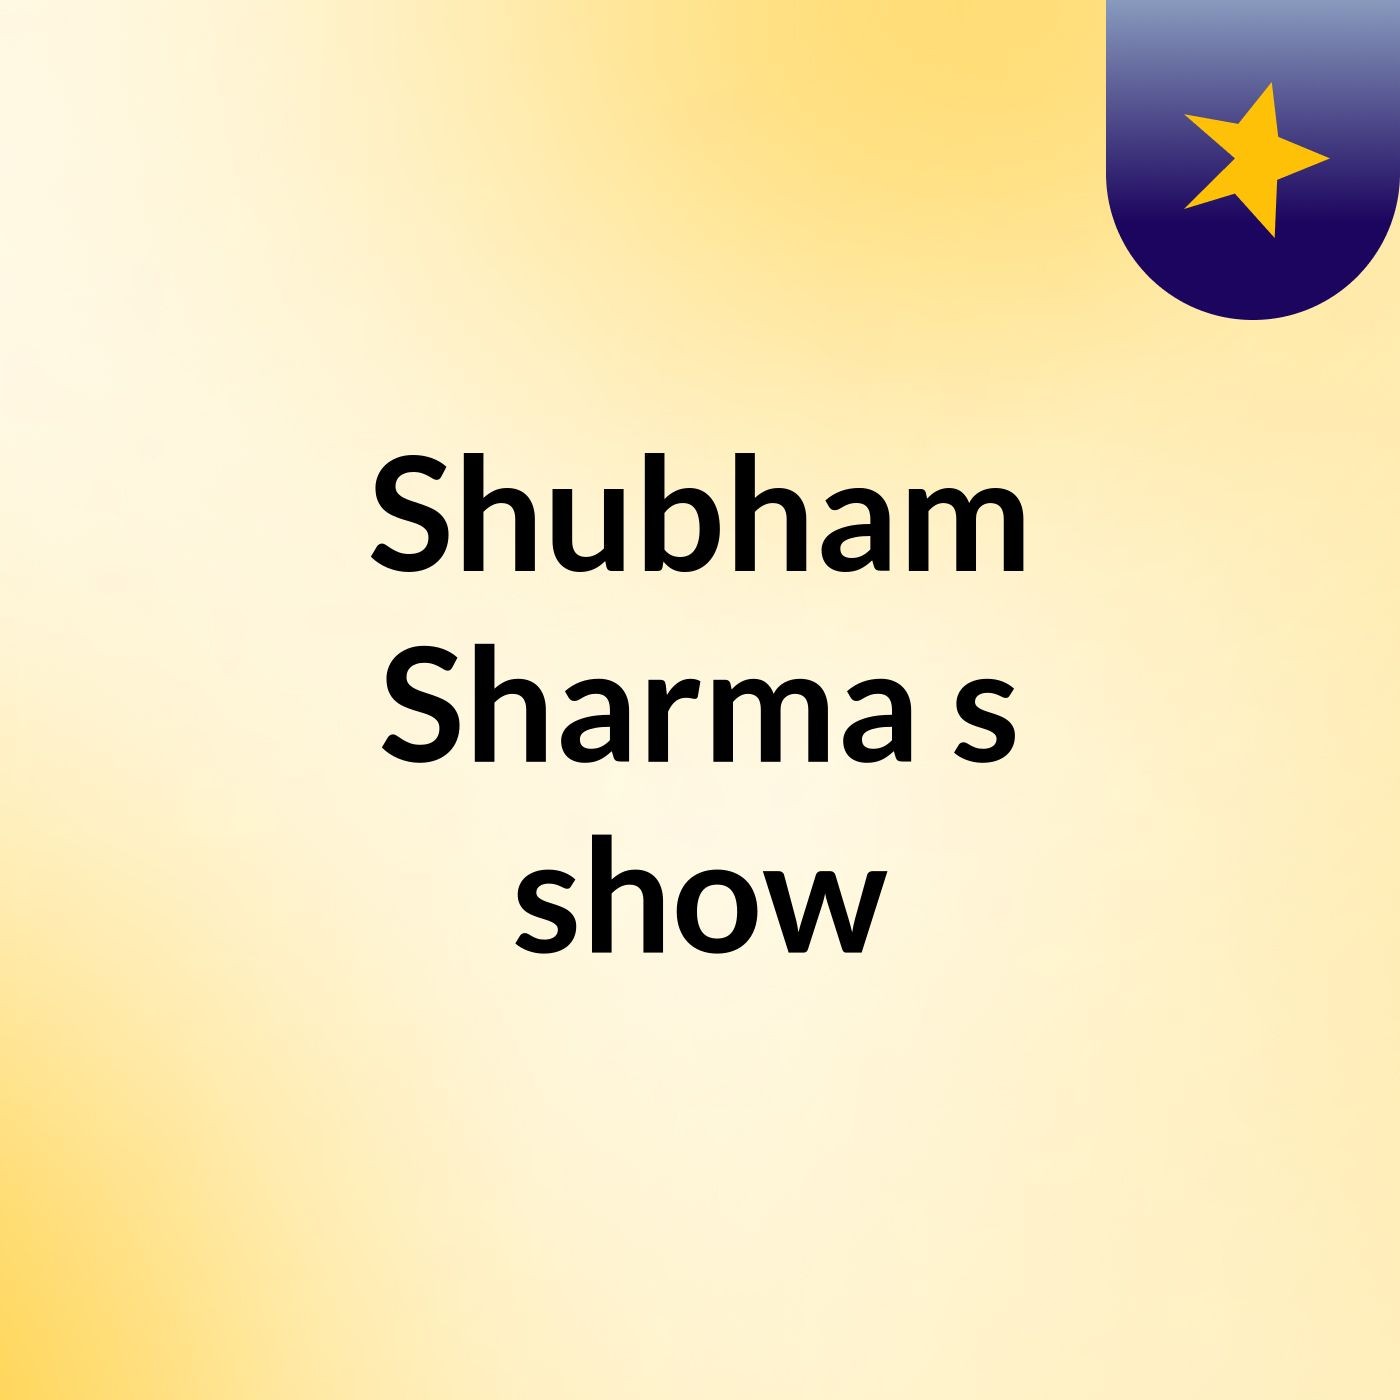 Shubham Sharma's show